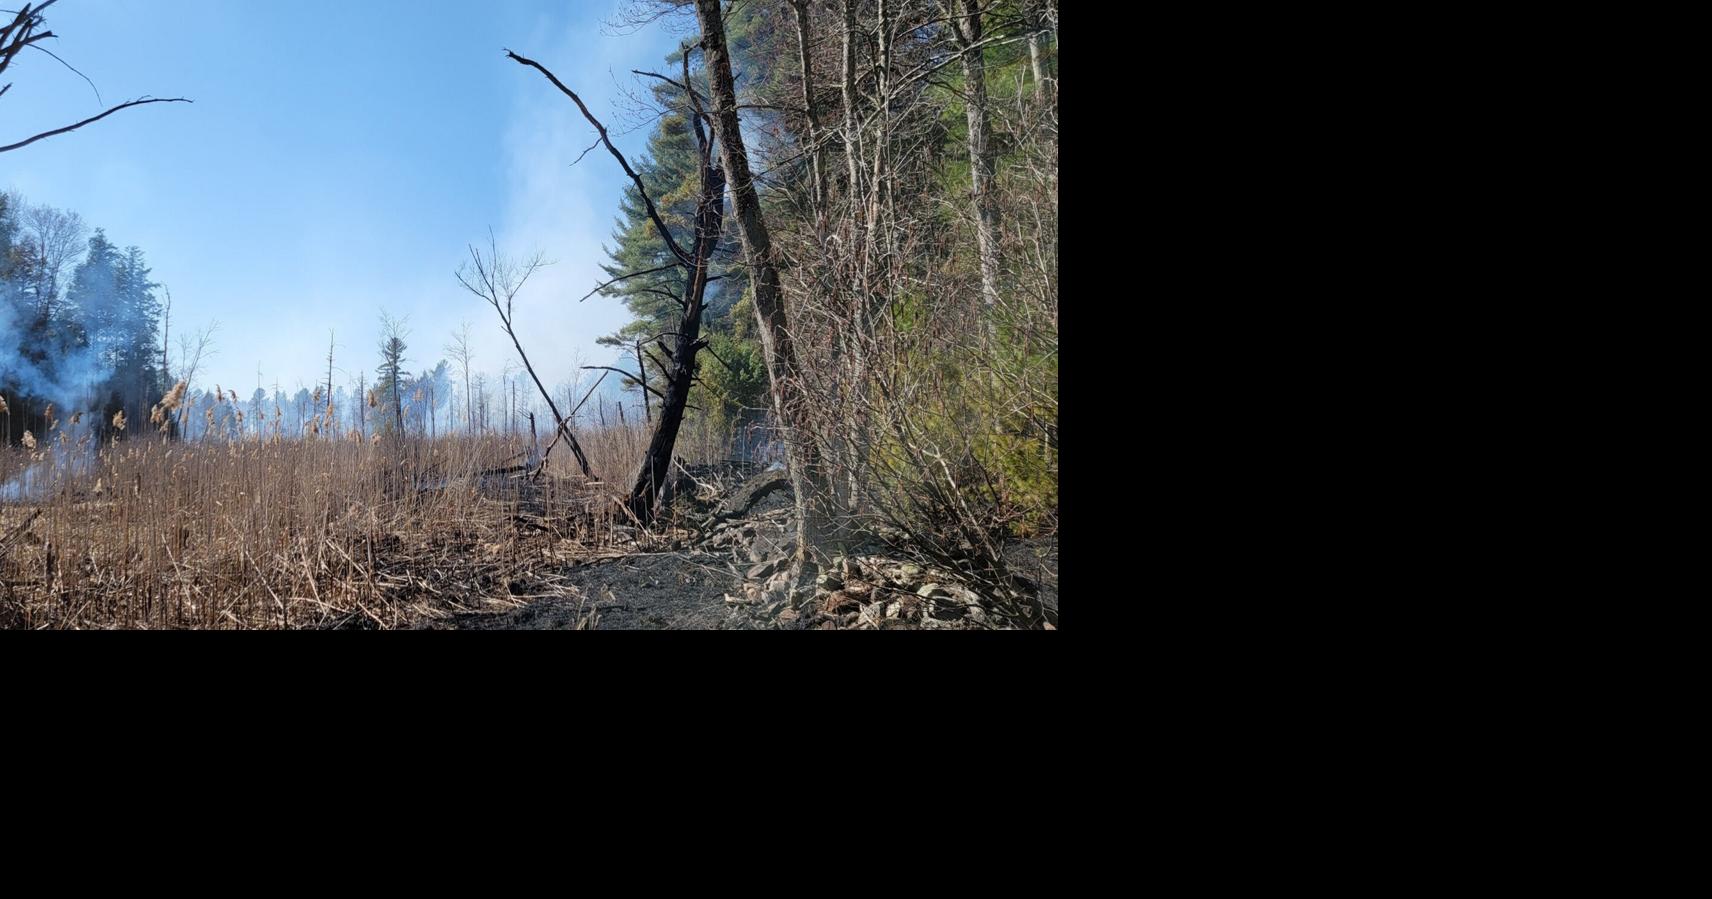 Burn ban still in effect — Firefighters battle large brush, woods fire